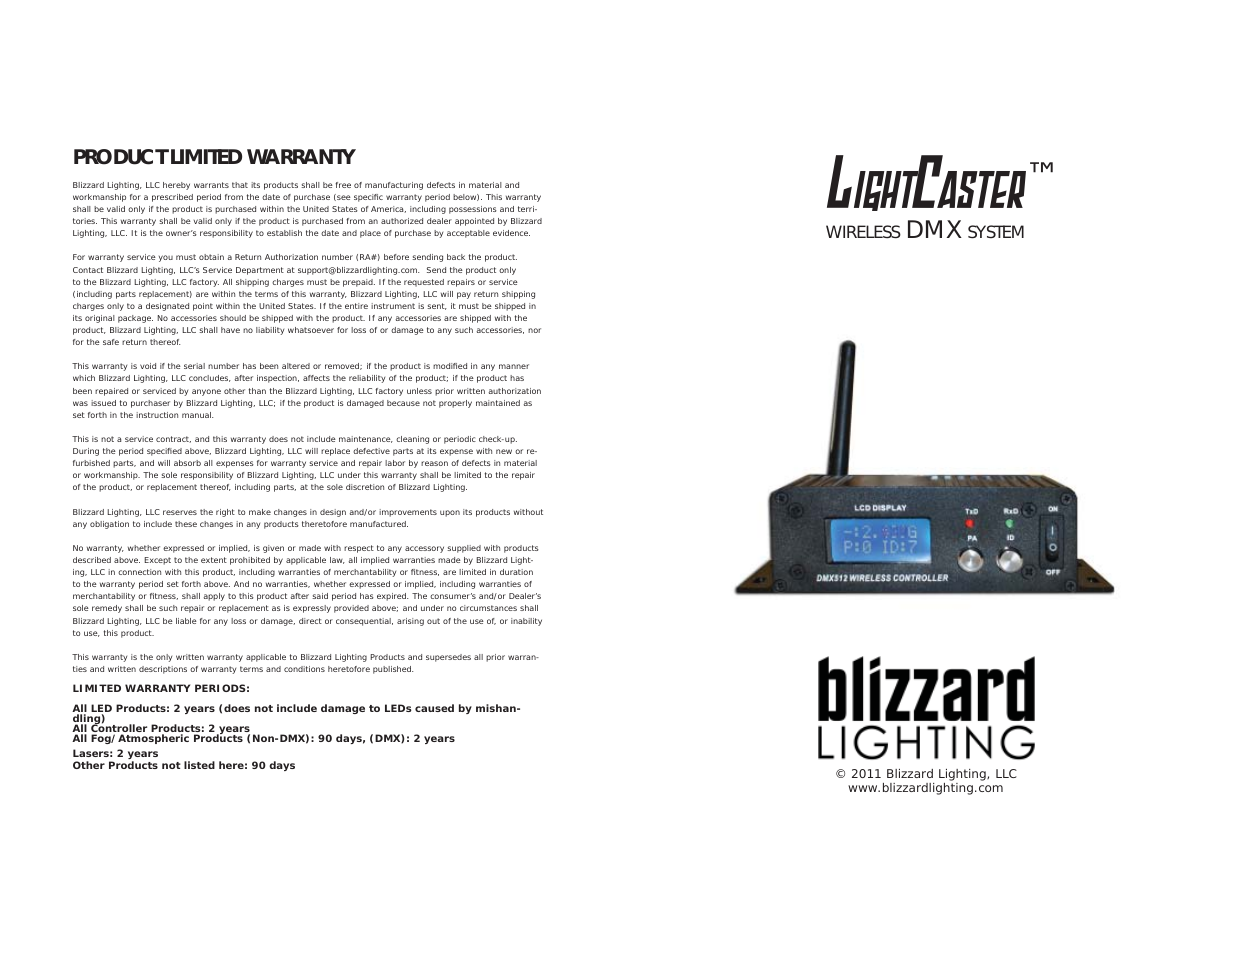 Lightcaster Wireless DMX System